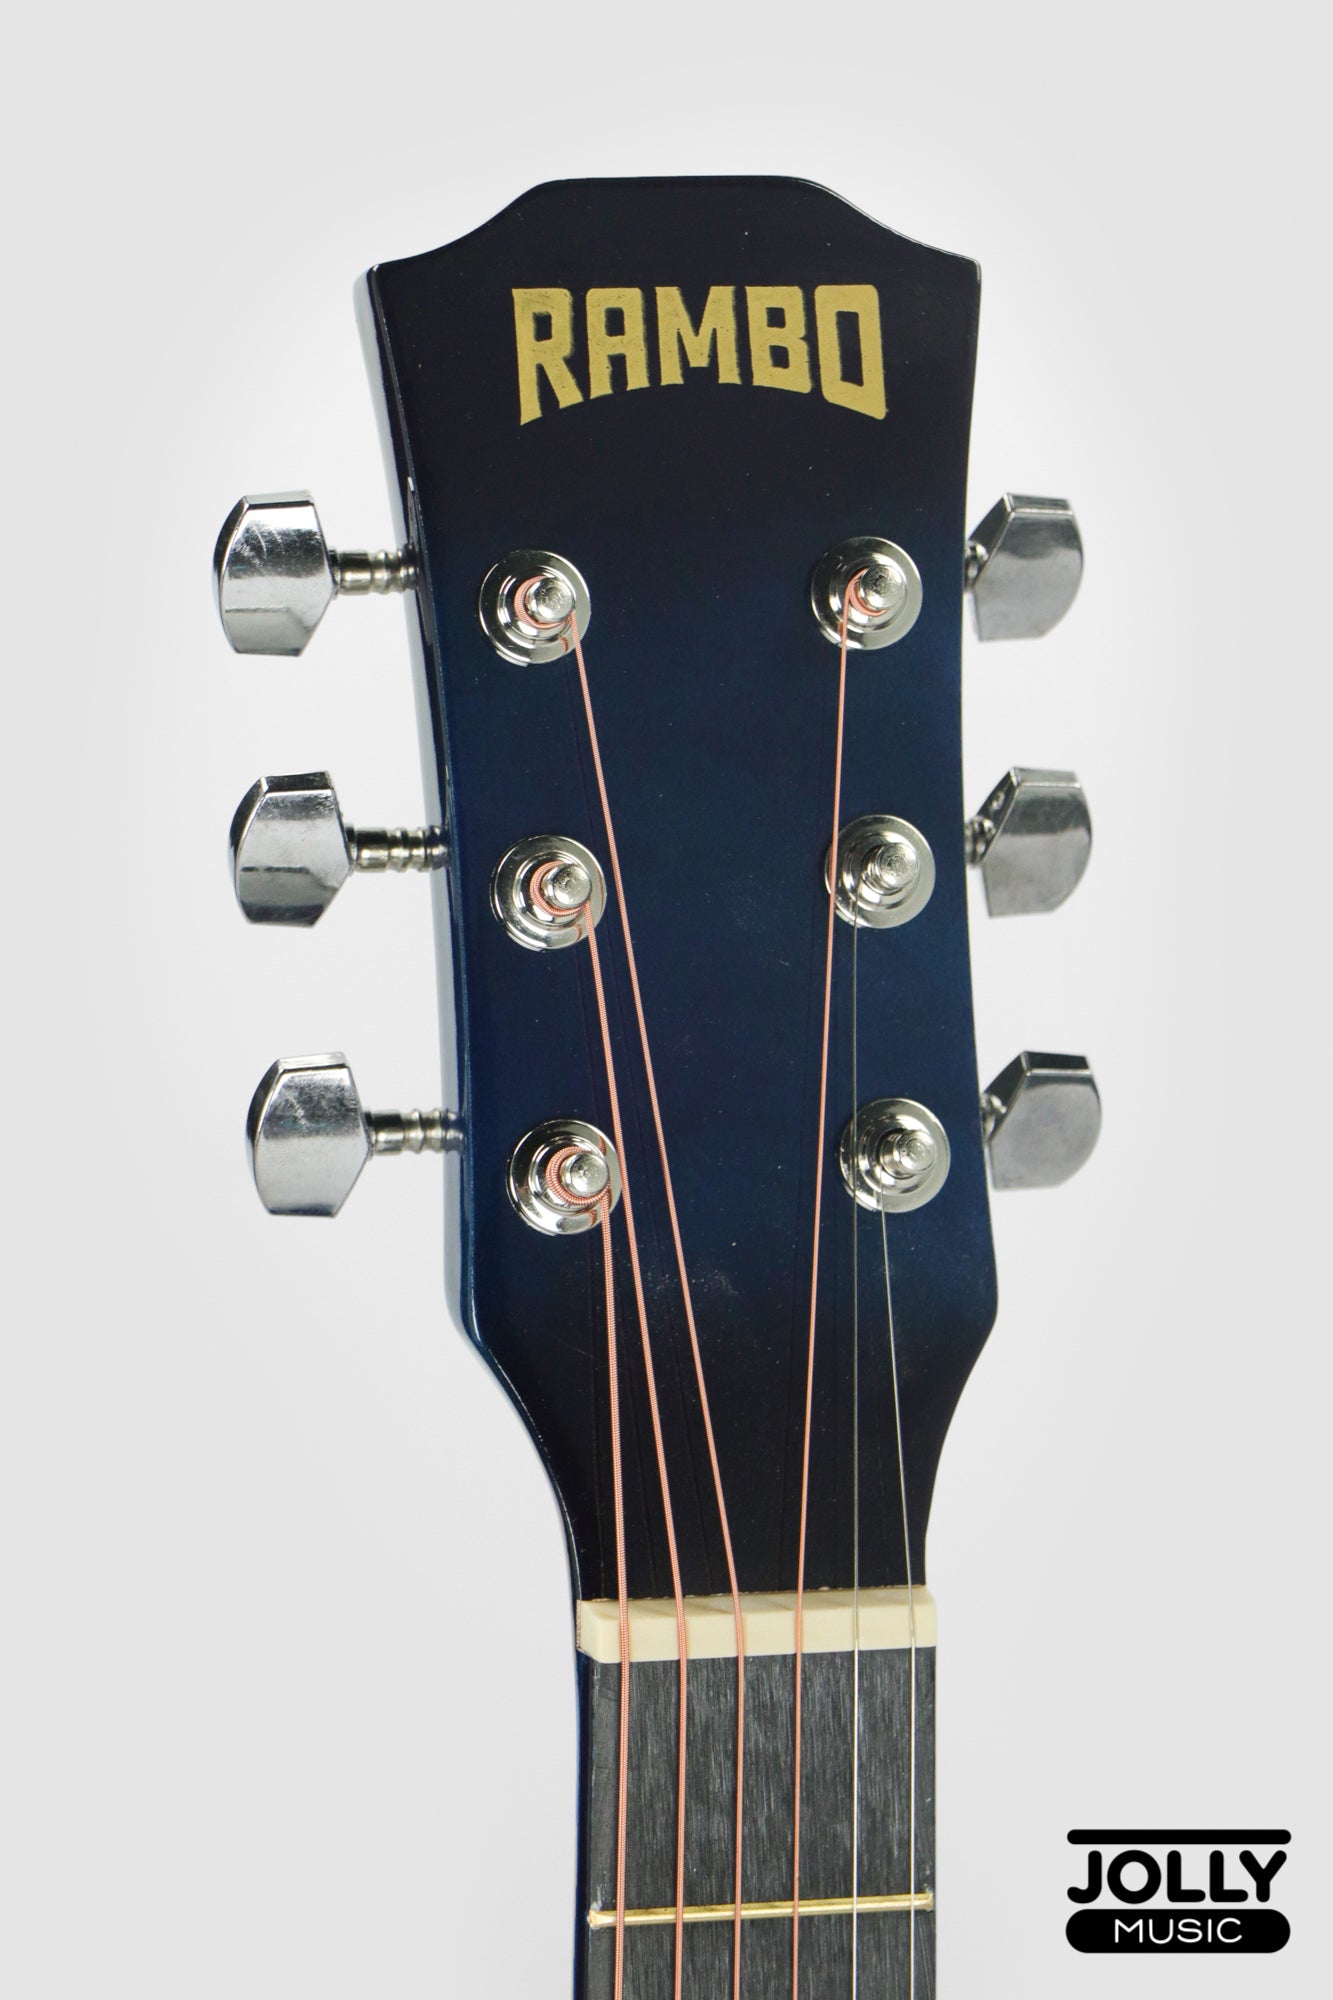 Rambo 38" Guitar K-38LT Truss Rod w/ Case, 3 Picks, Tuner, Capo - Blue Burst